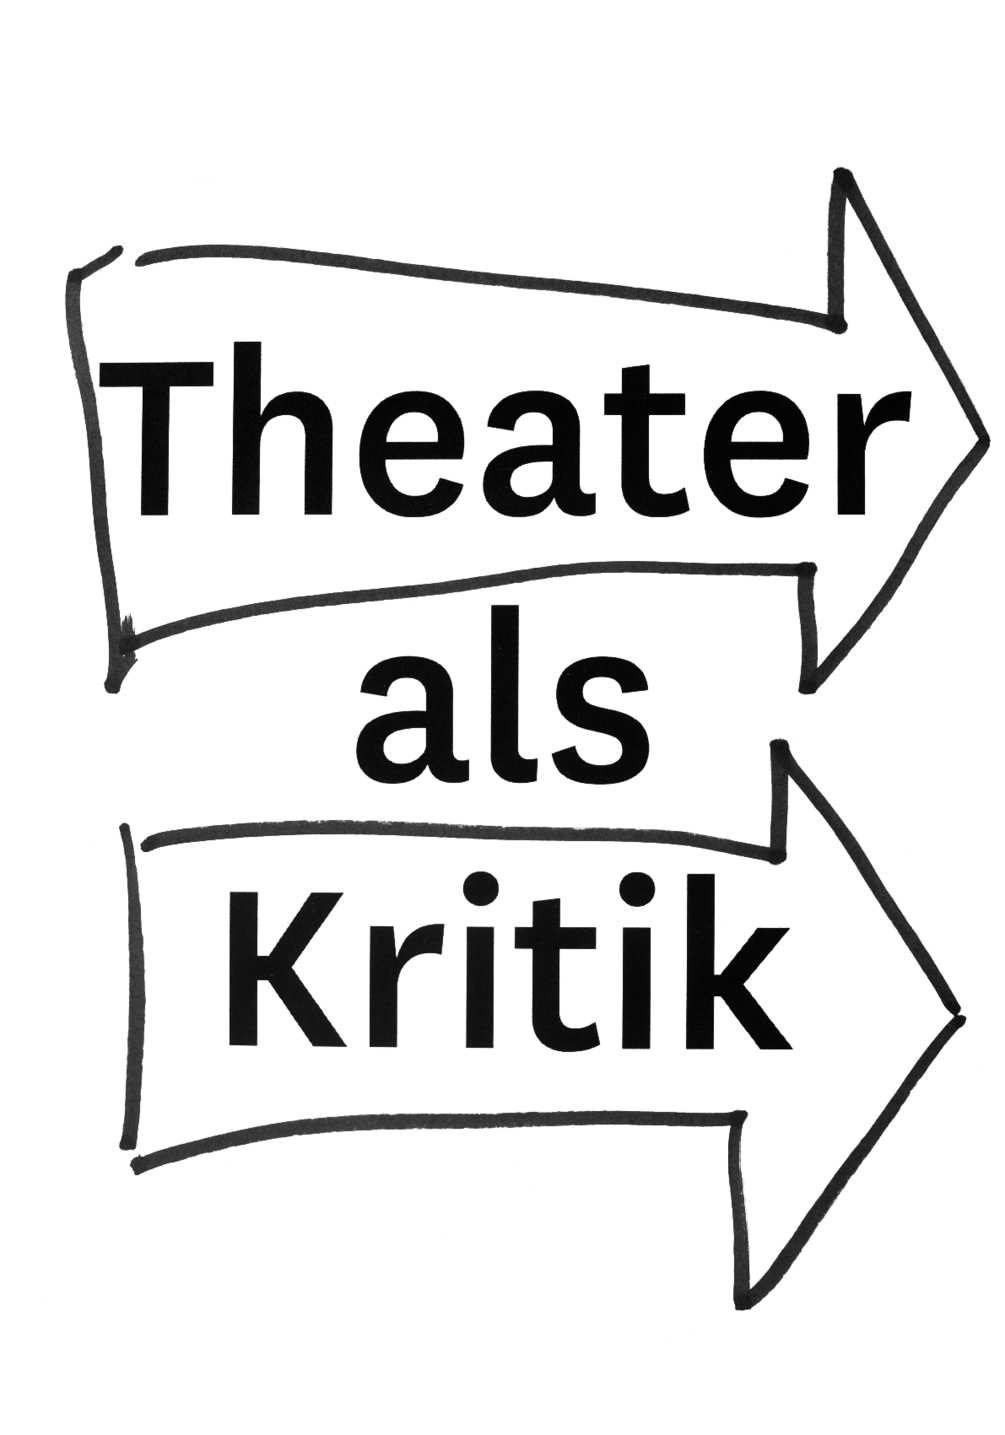 theater-as-critique-slip-16-1005x1435px